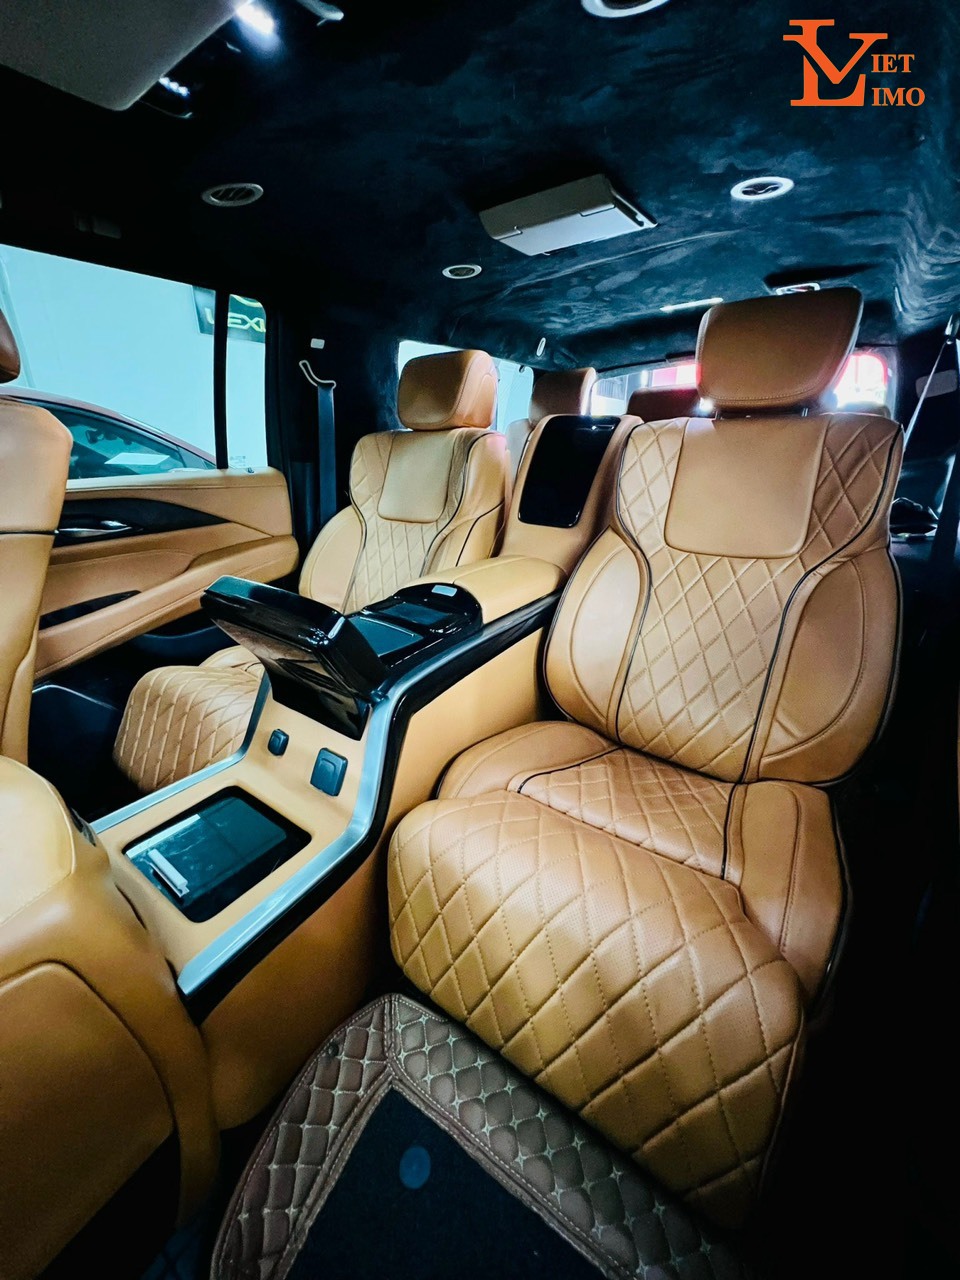 Led trần xe limousine: Mẫu bọc trần đẹp